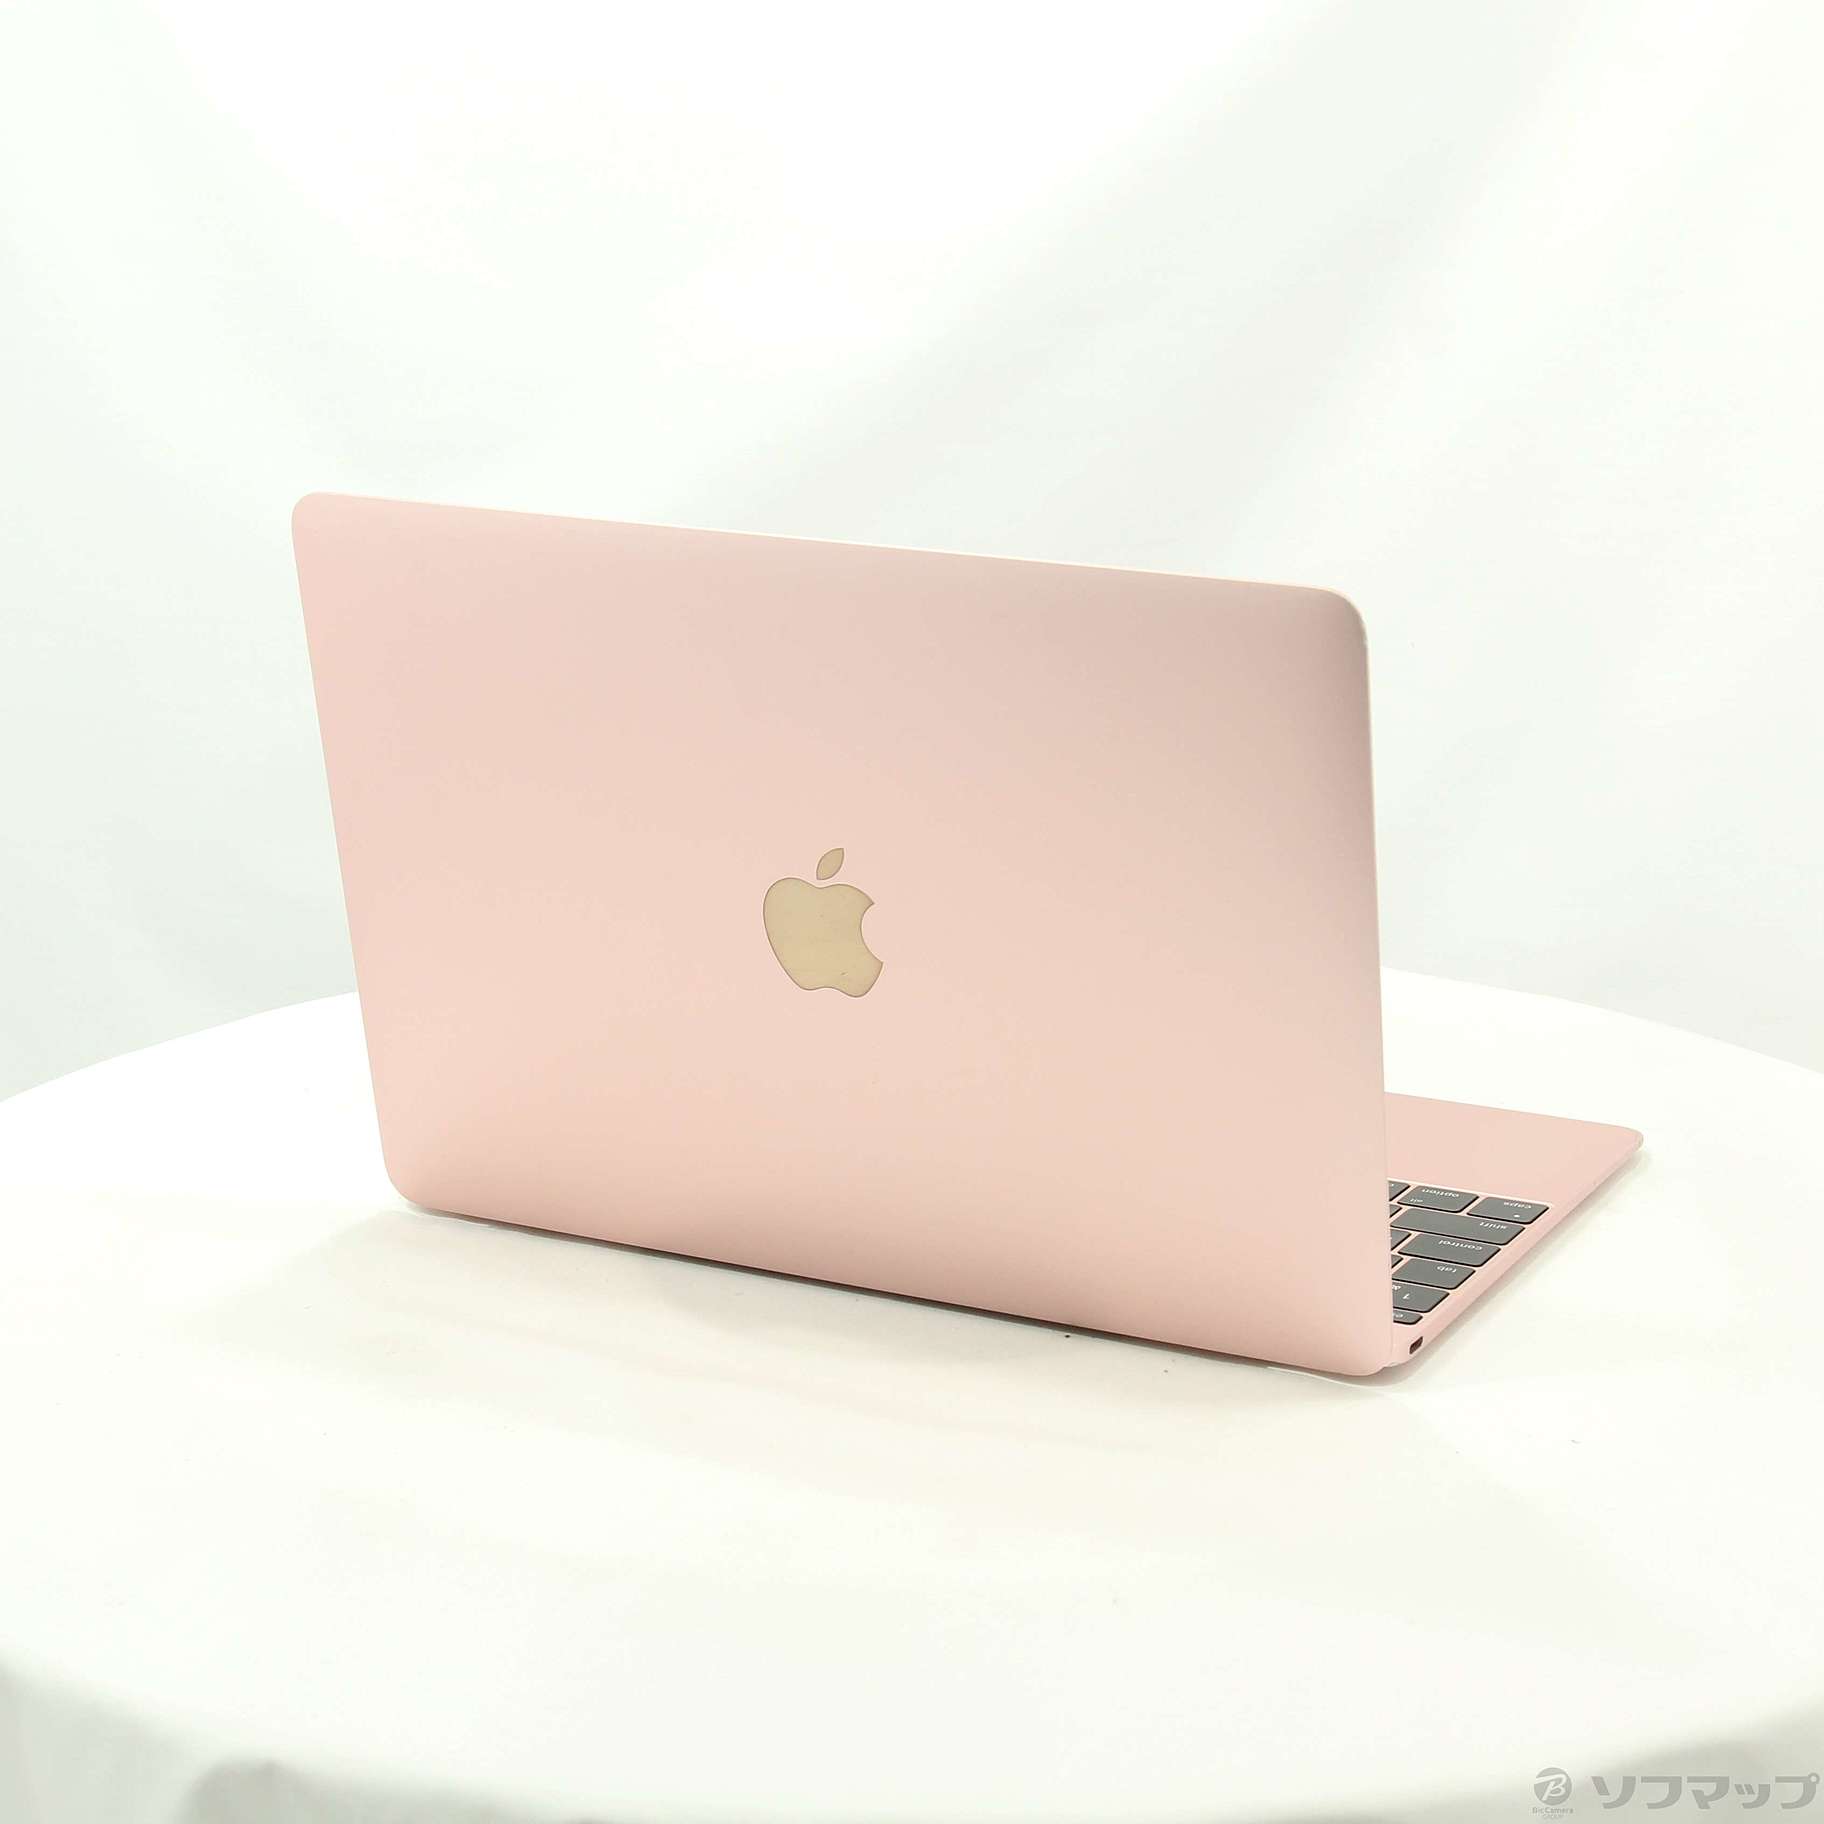 APPLE MacBook MACBOOK MLHA2J A Junk - 7